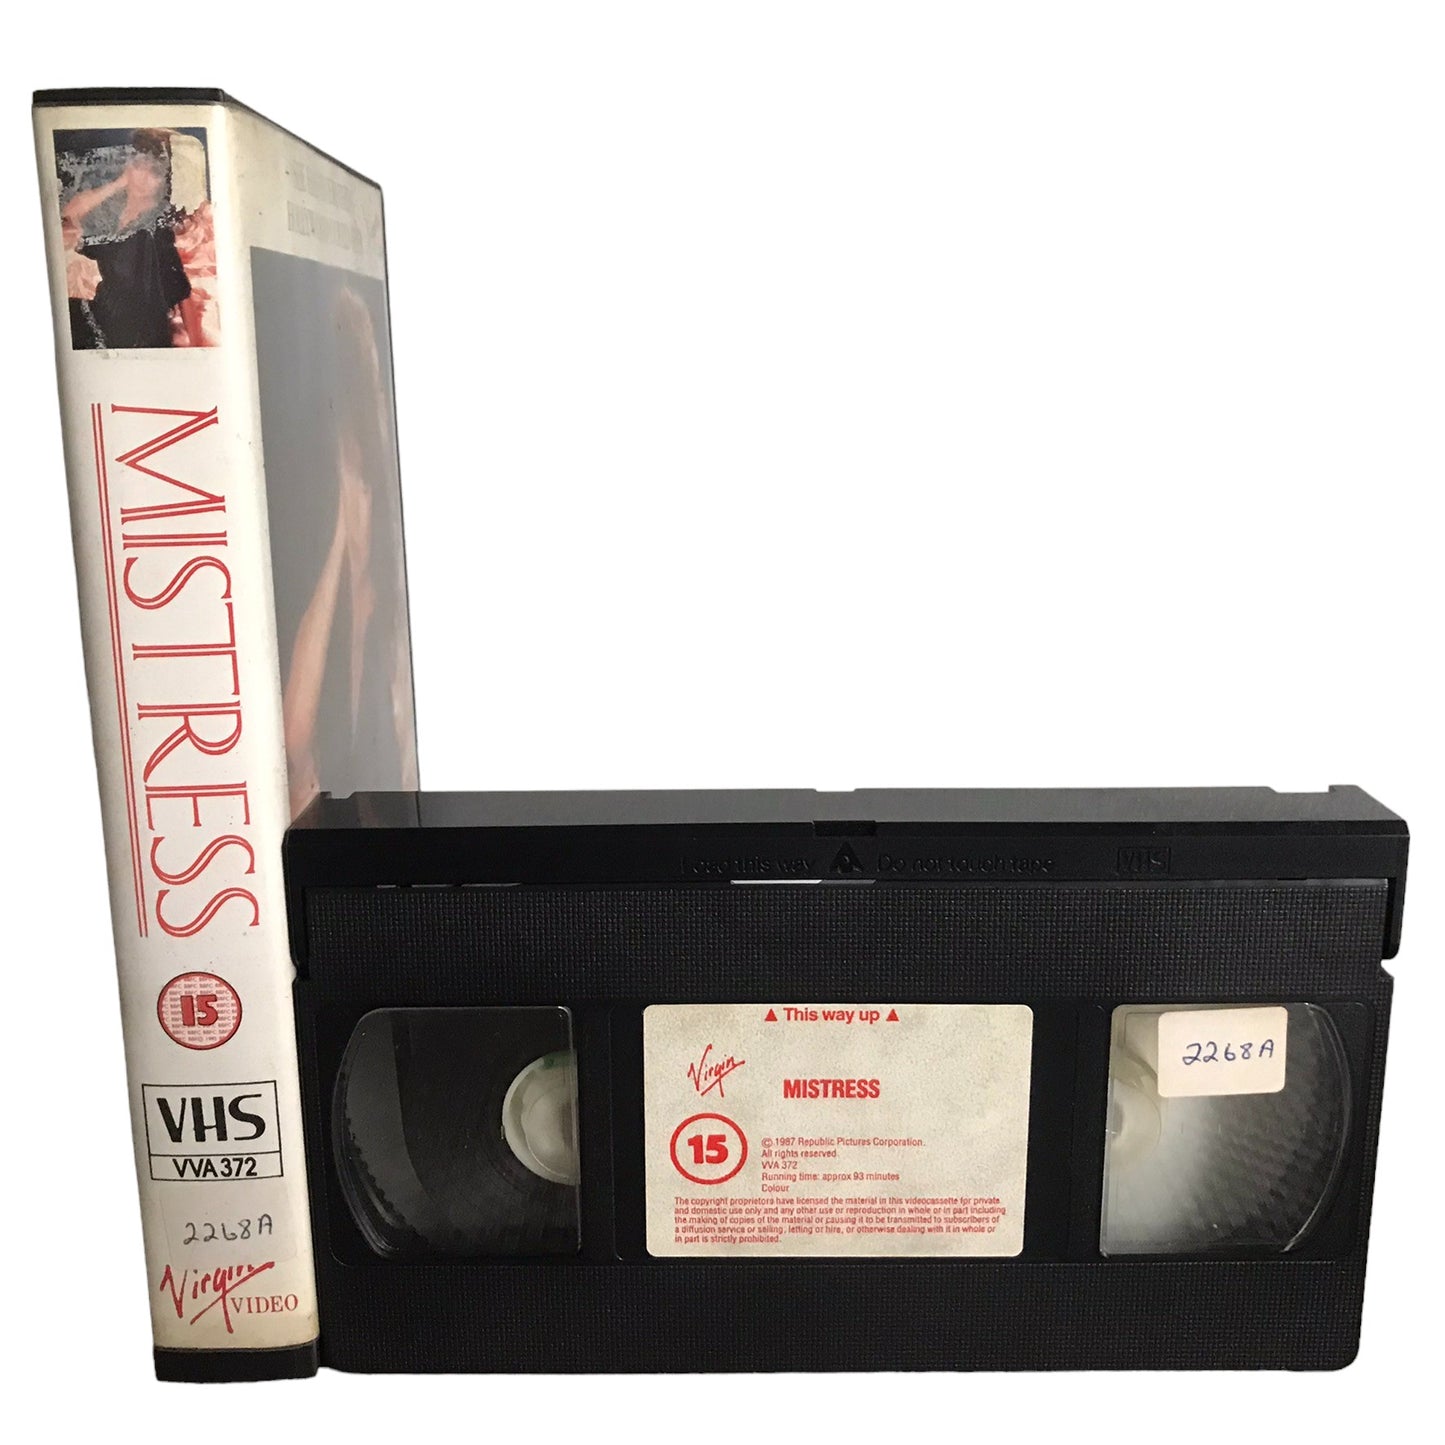 Mistress - Victoria Principal - Virgin Video - Large Box - Pal - VHS-